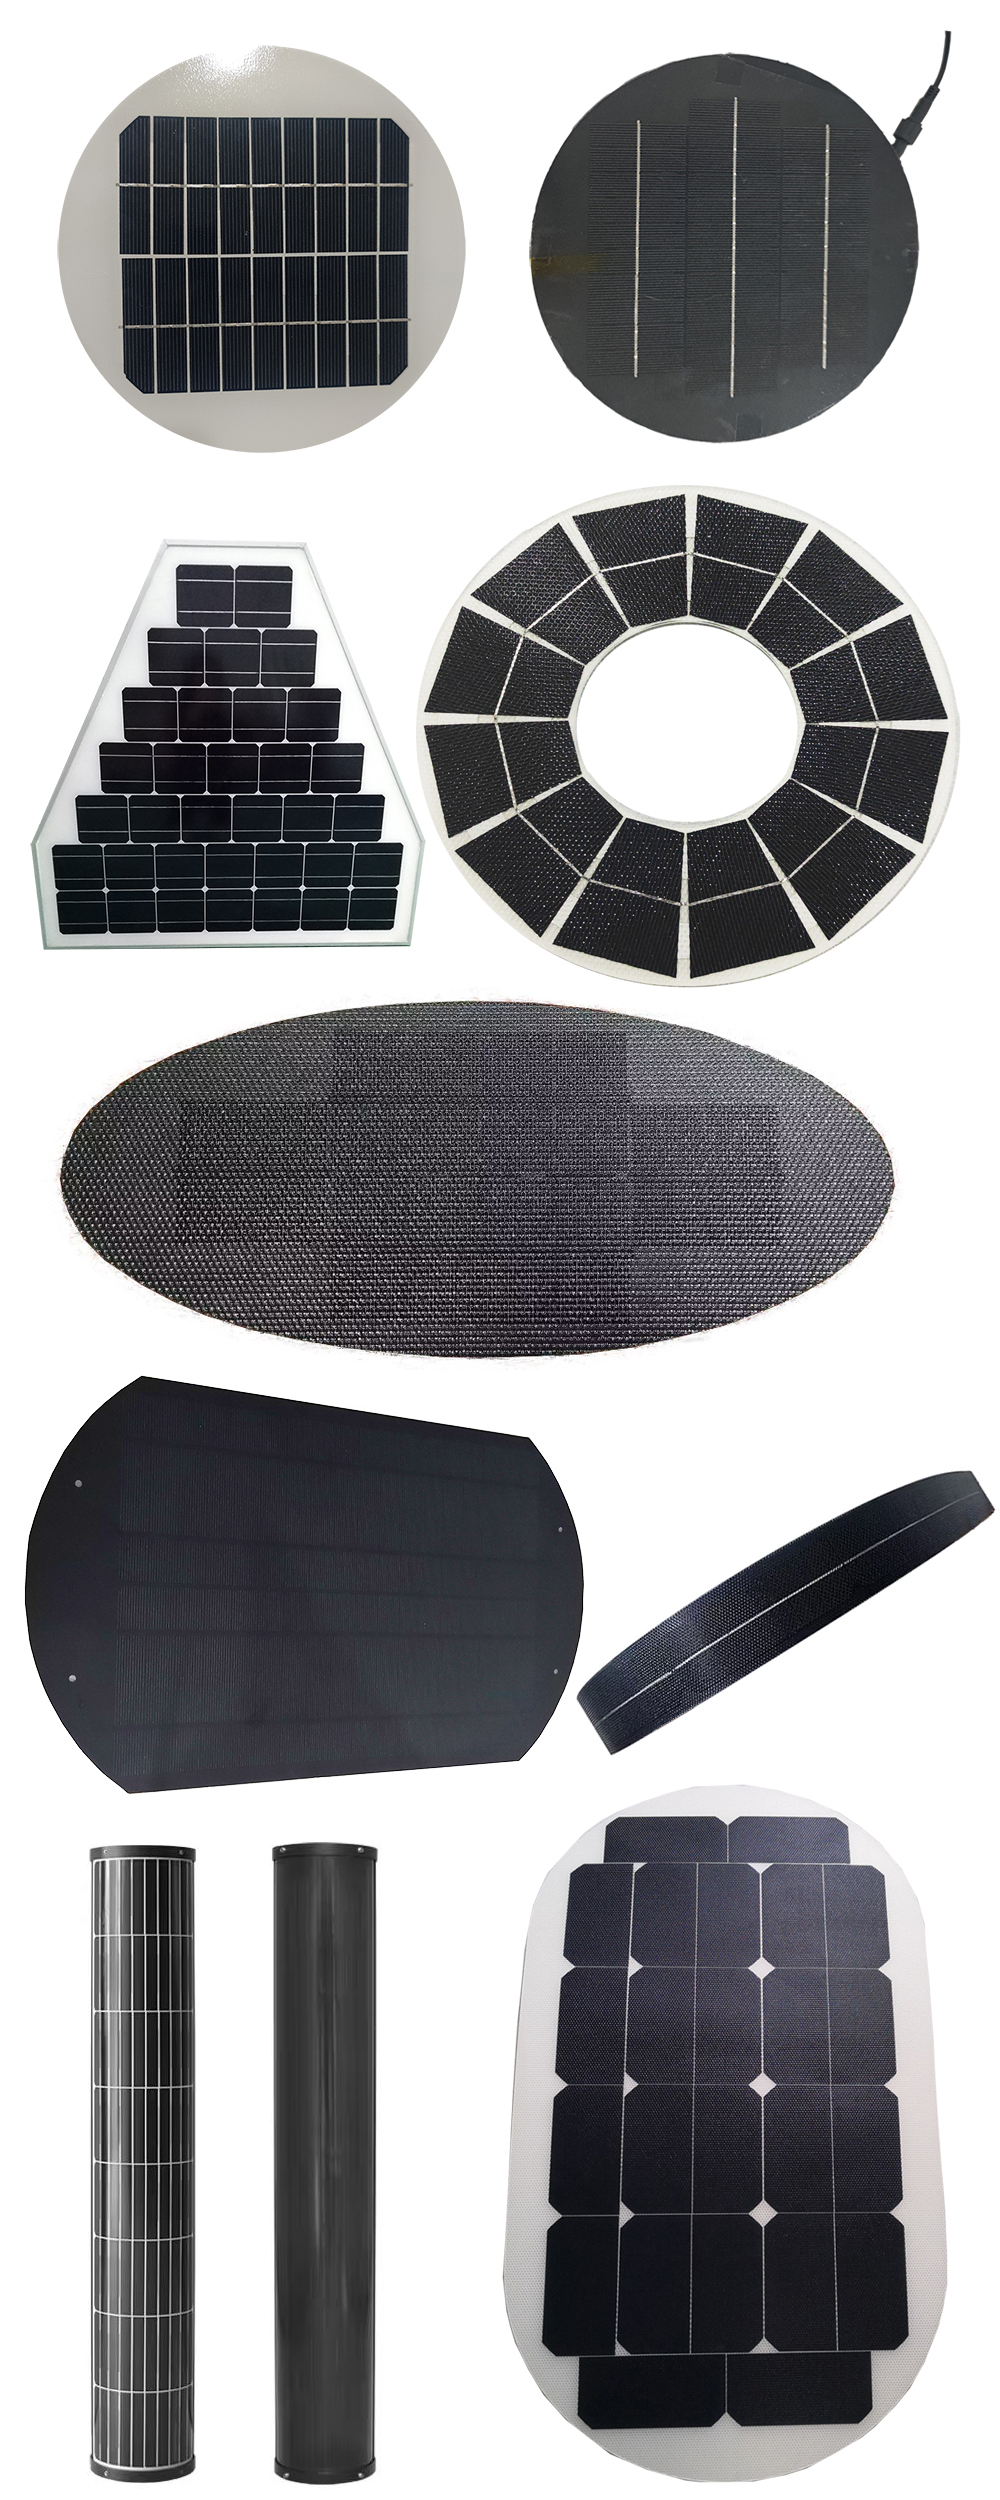 xxr oval shape solar panel examples 